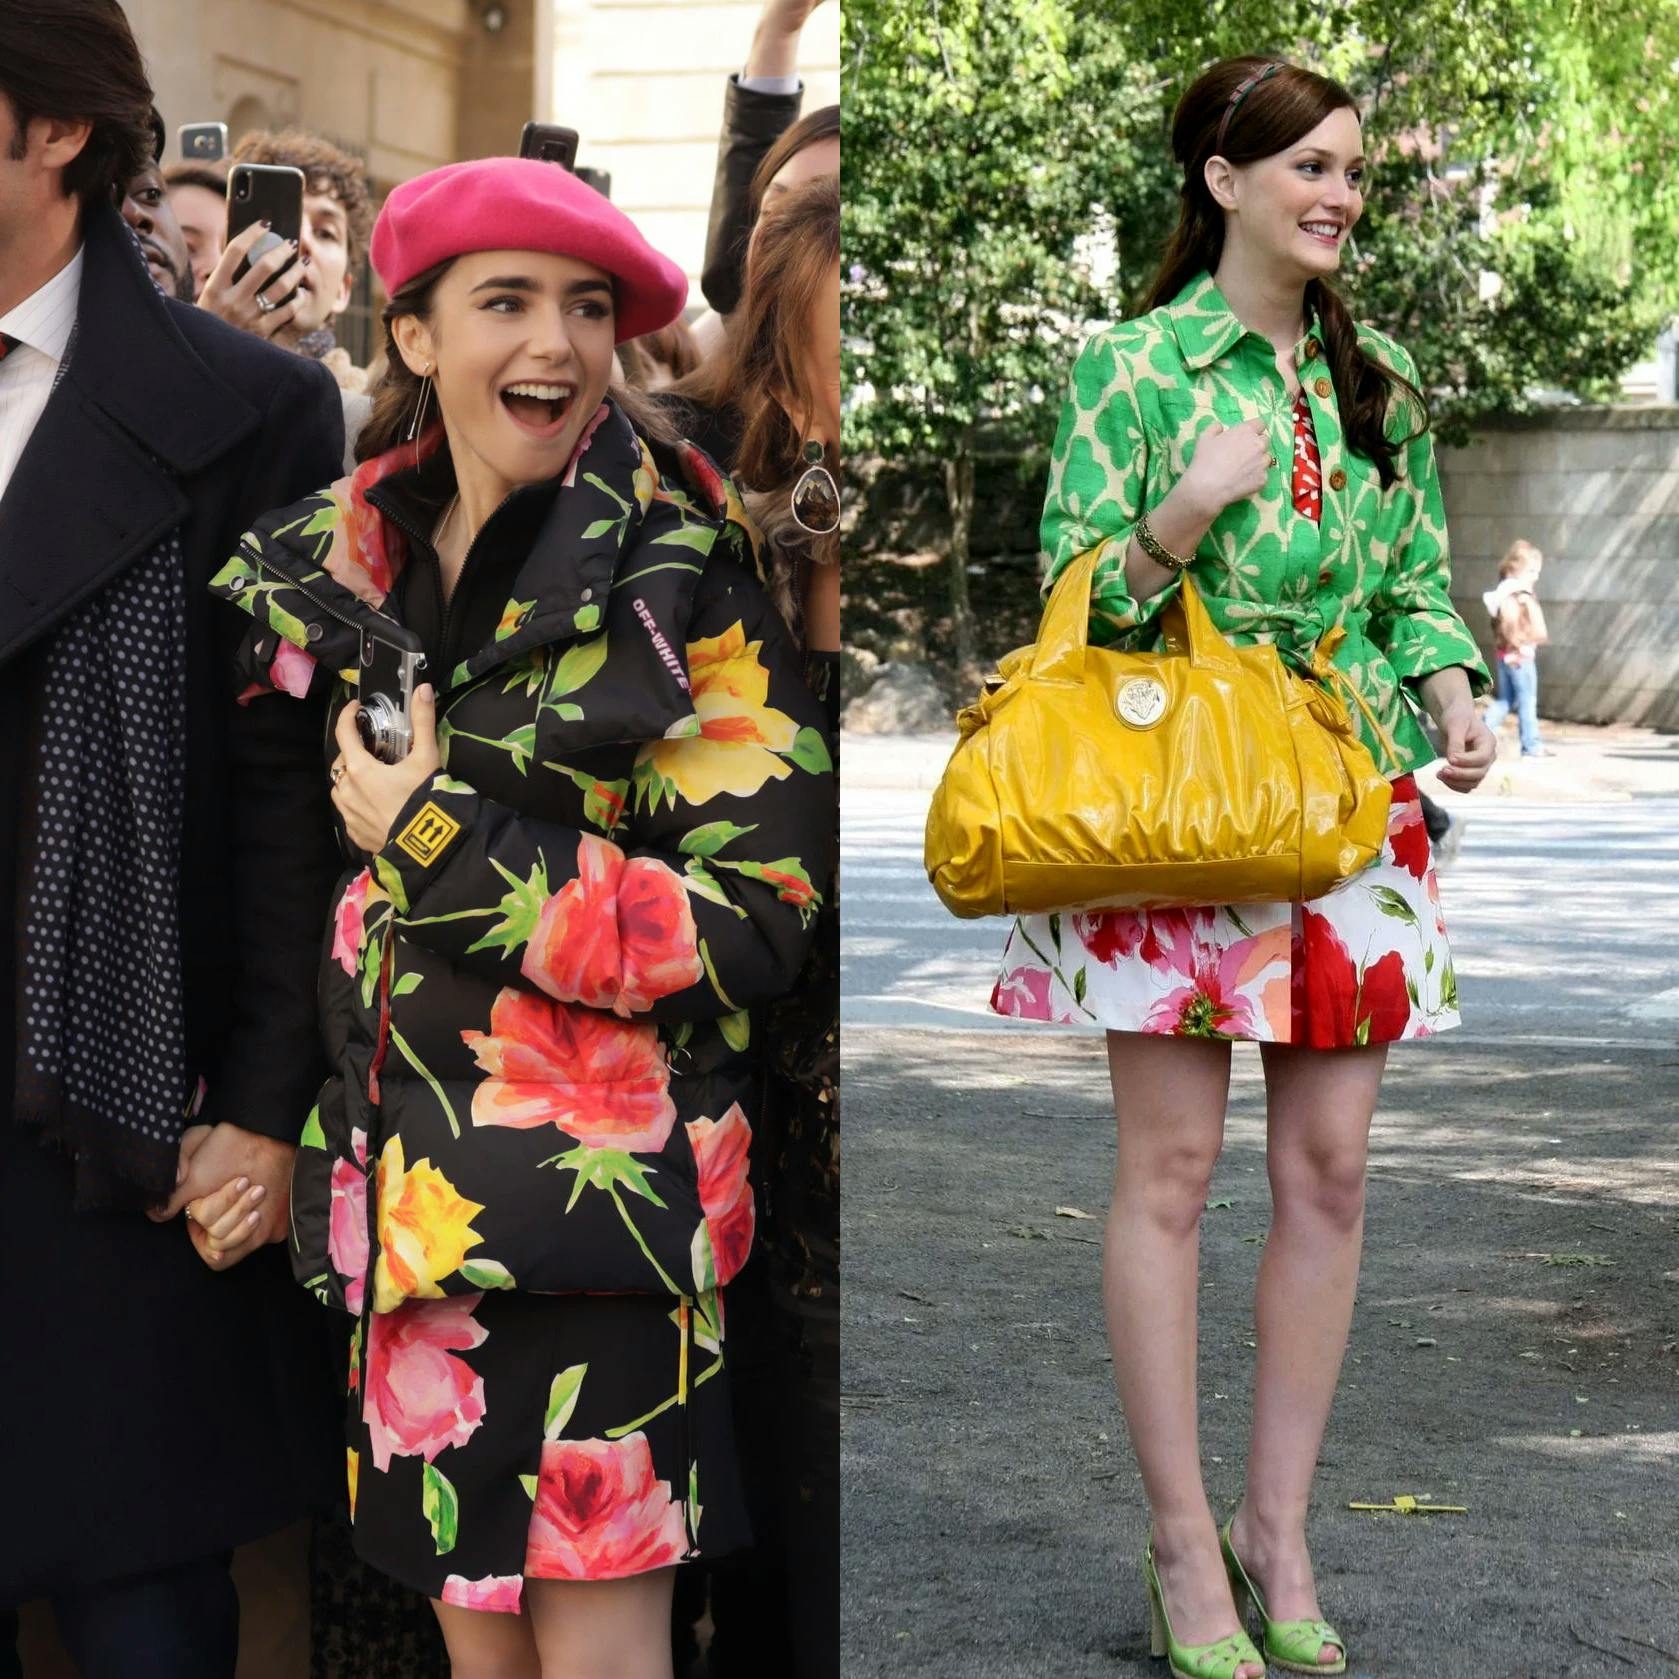 Netflix/Emily In Paris / The CW/Gossip Girl